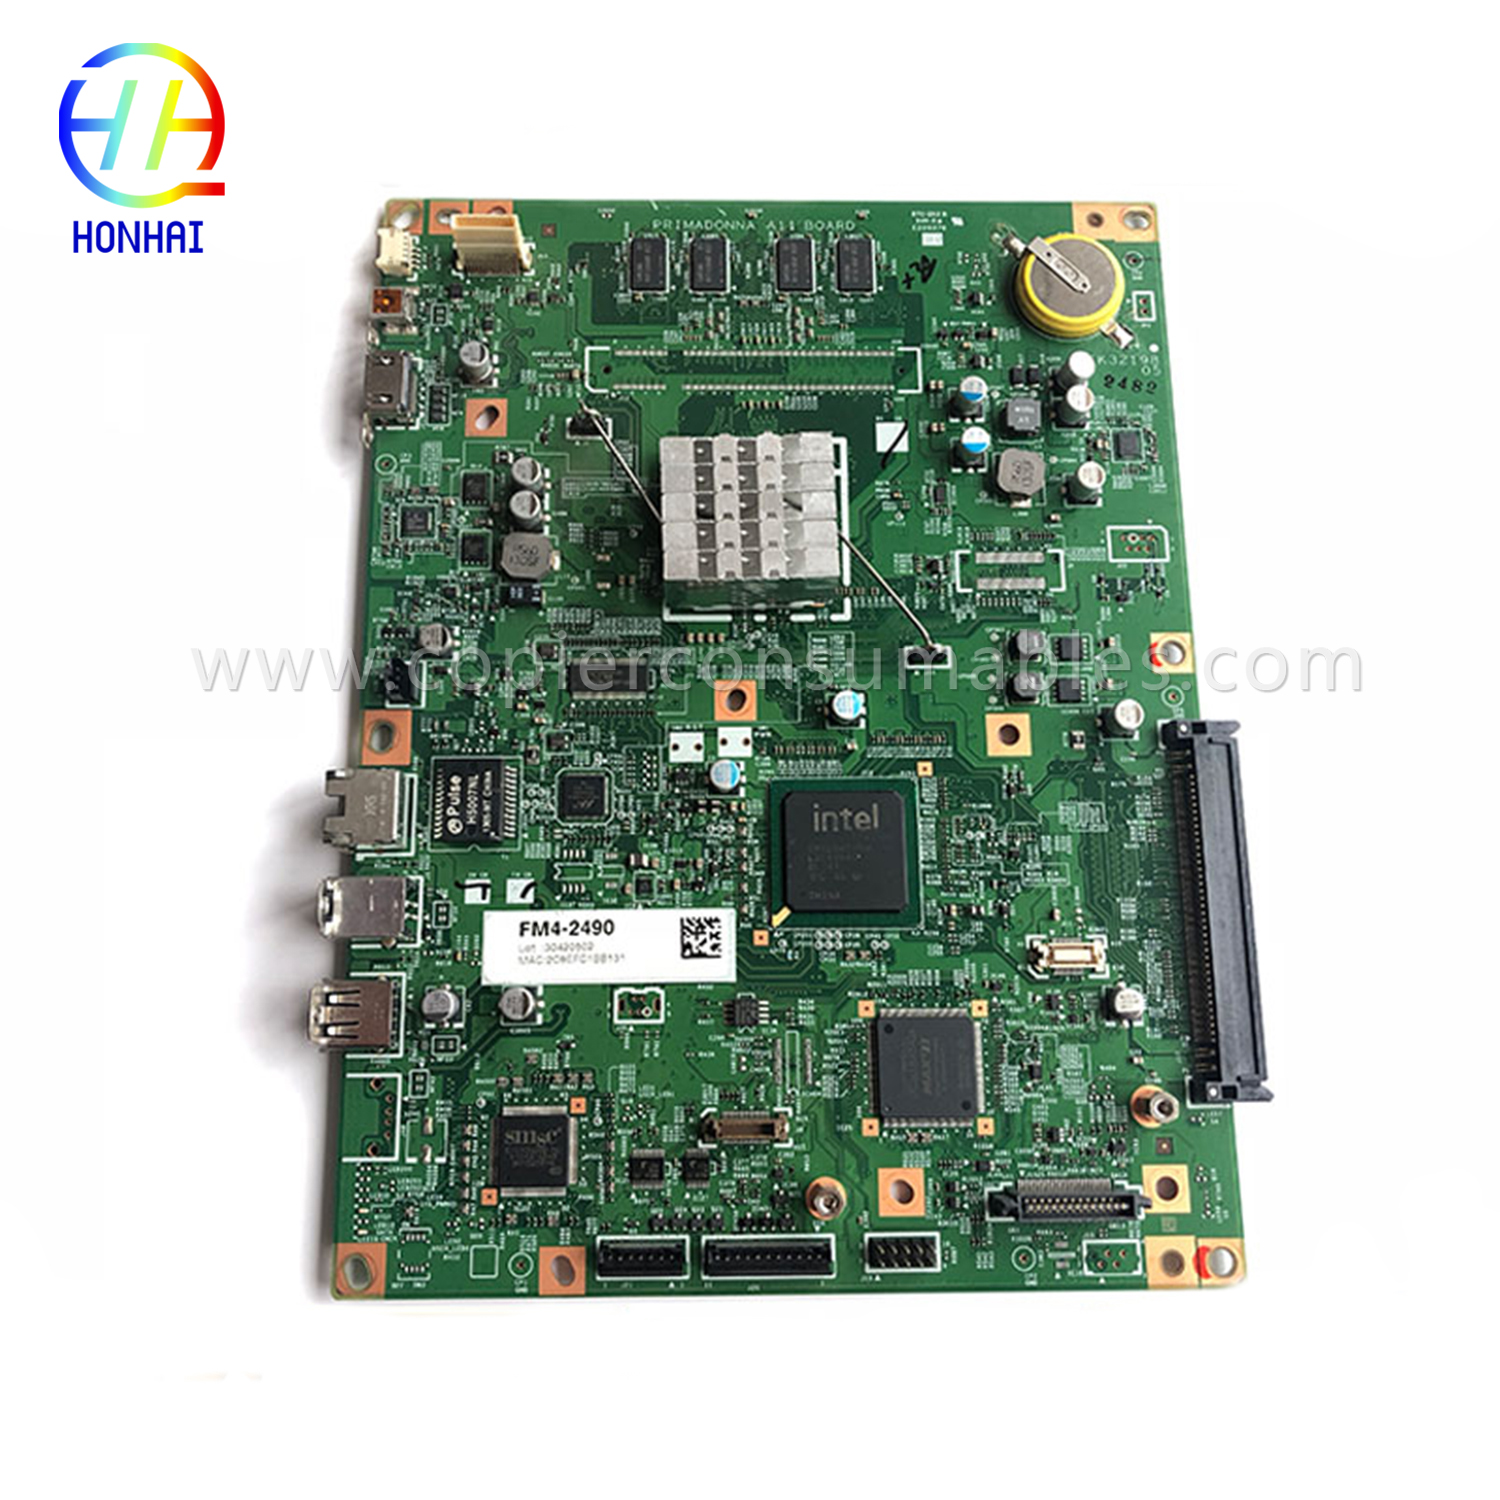 Main Controller PCB Board für Canon IR Adv 6255 6265 6275 FM4-2490-000 OEM